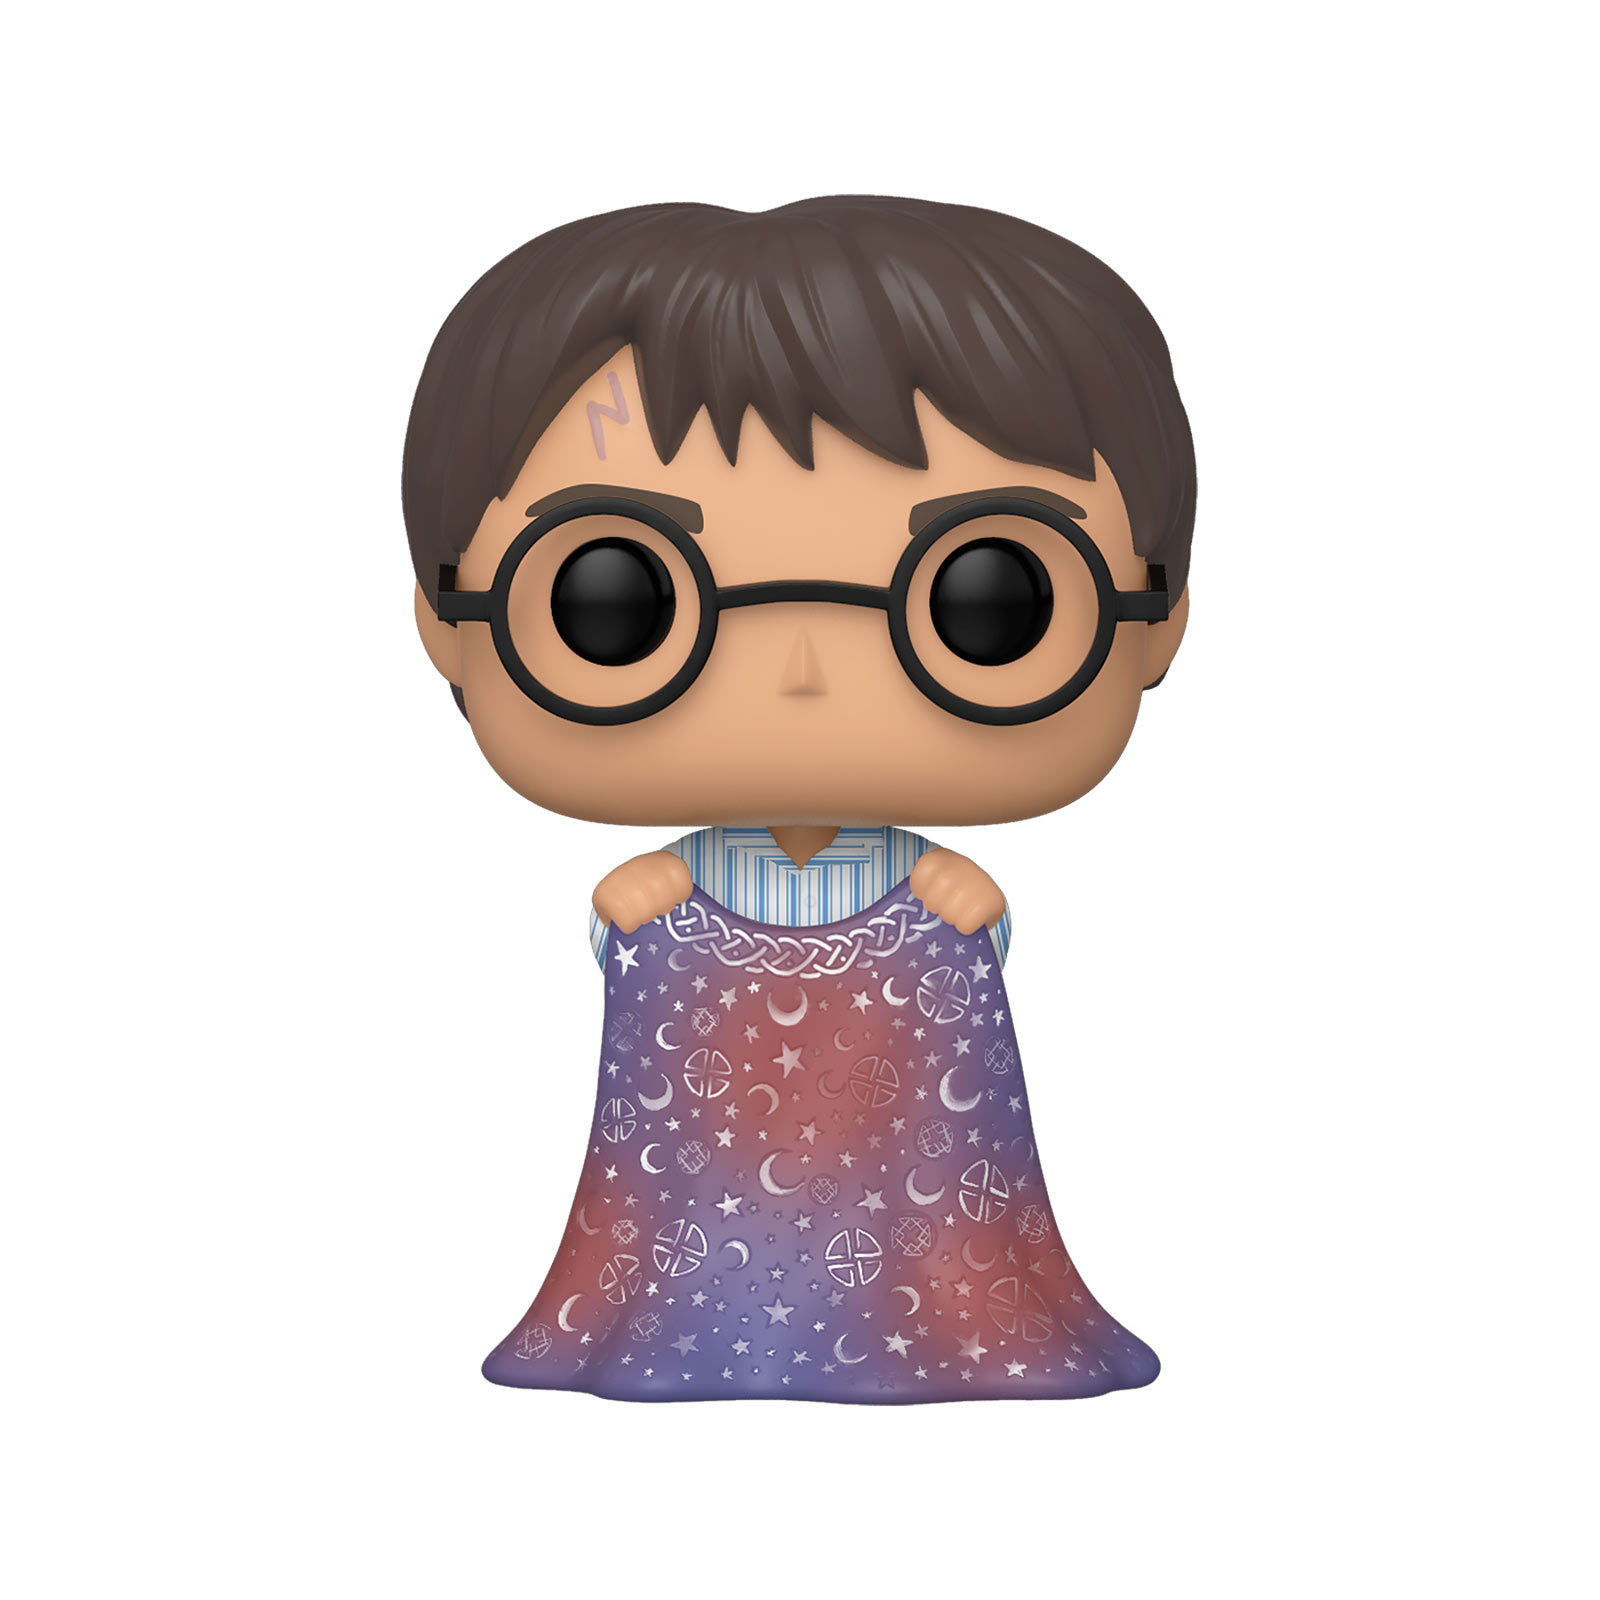 Harry Potter with Invisibility Cloak Funko Pop Figure